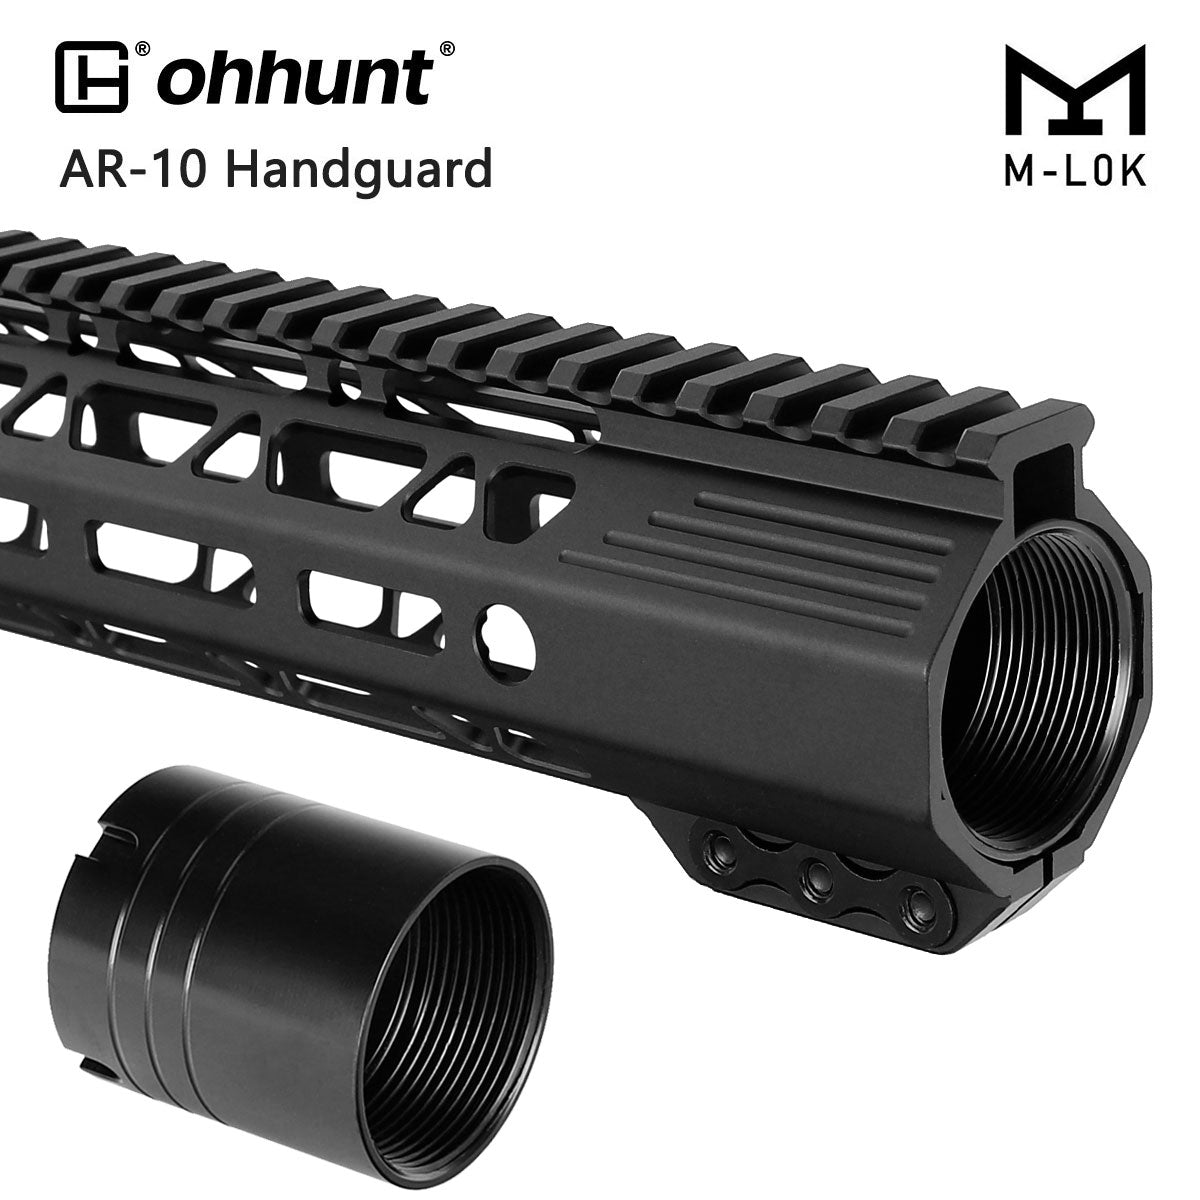 ohhunt® AR10 Handguard Lightweight & Slim Desigh - 17 inch